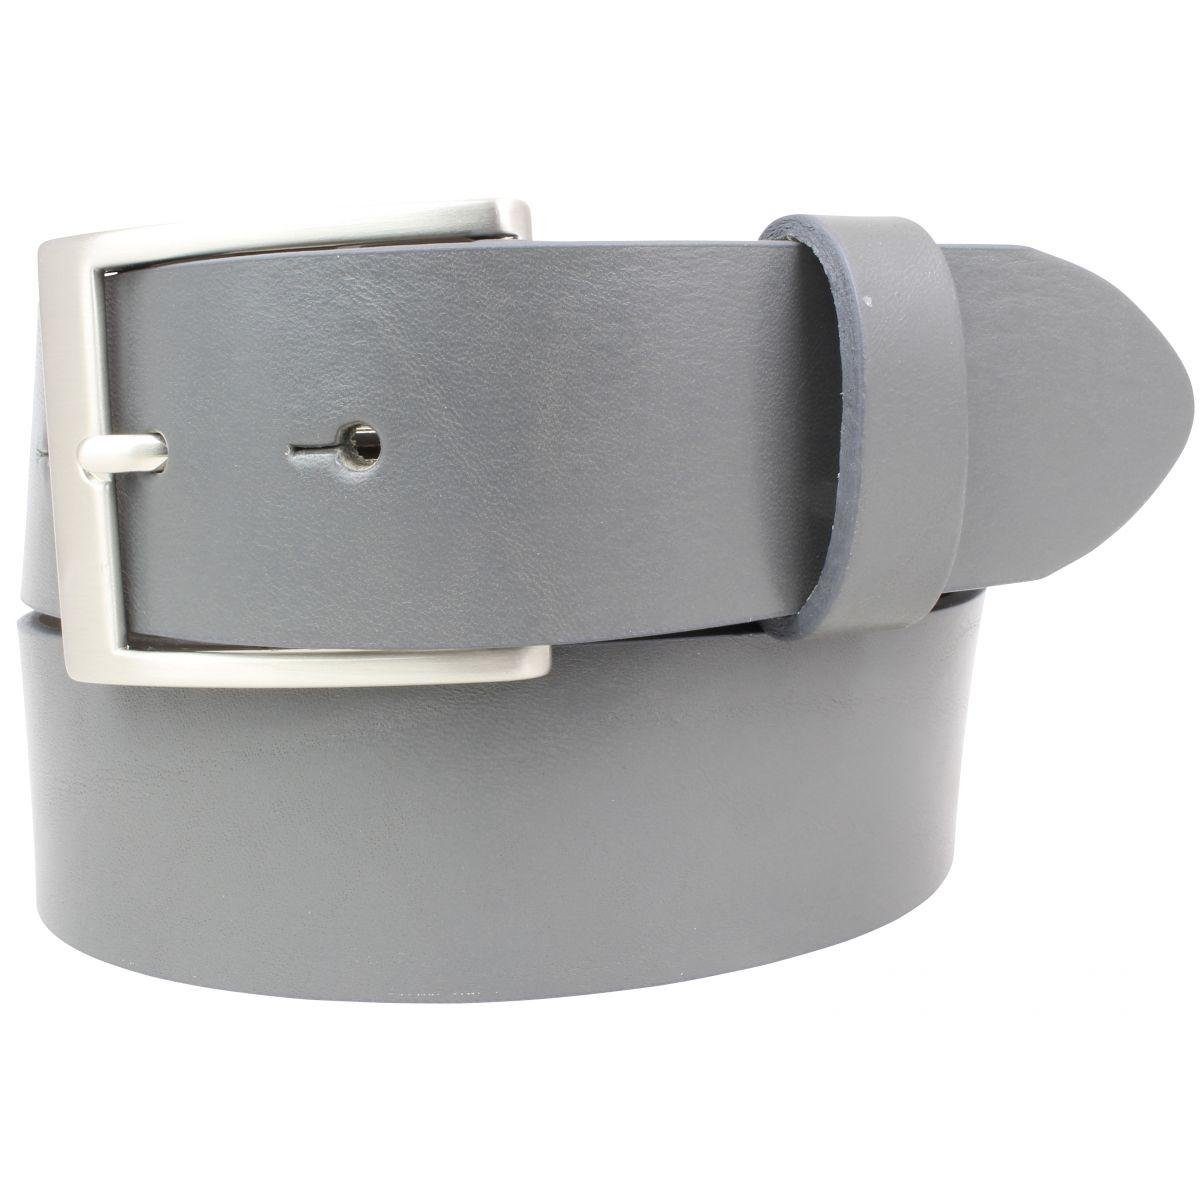 BELTINGER Ledergürtel Silber Dunkelgrau, 4 aus mit Edelstahl-Gürtelschnalle c Hochwertiger Vollrindleder Gürtel